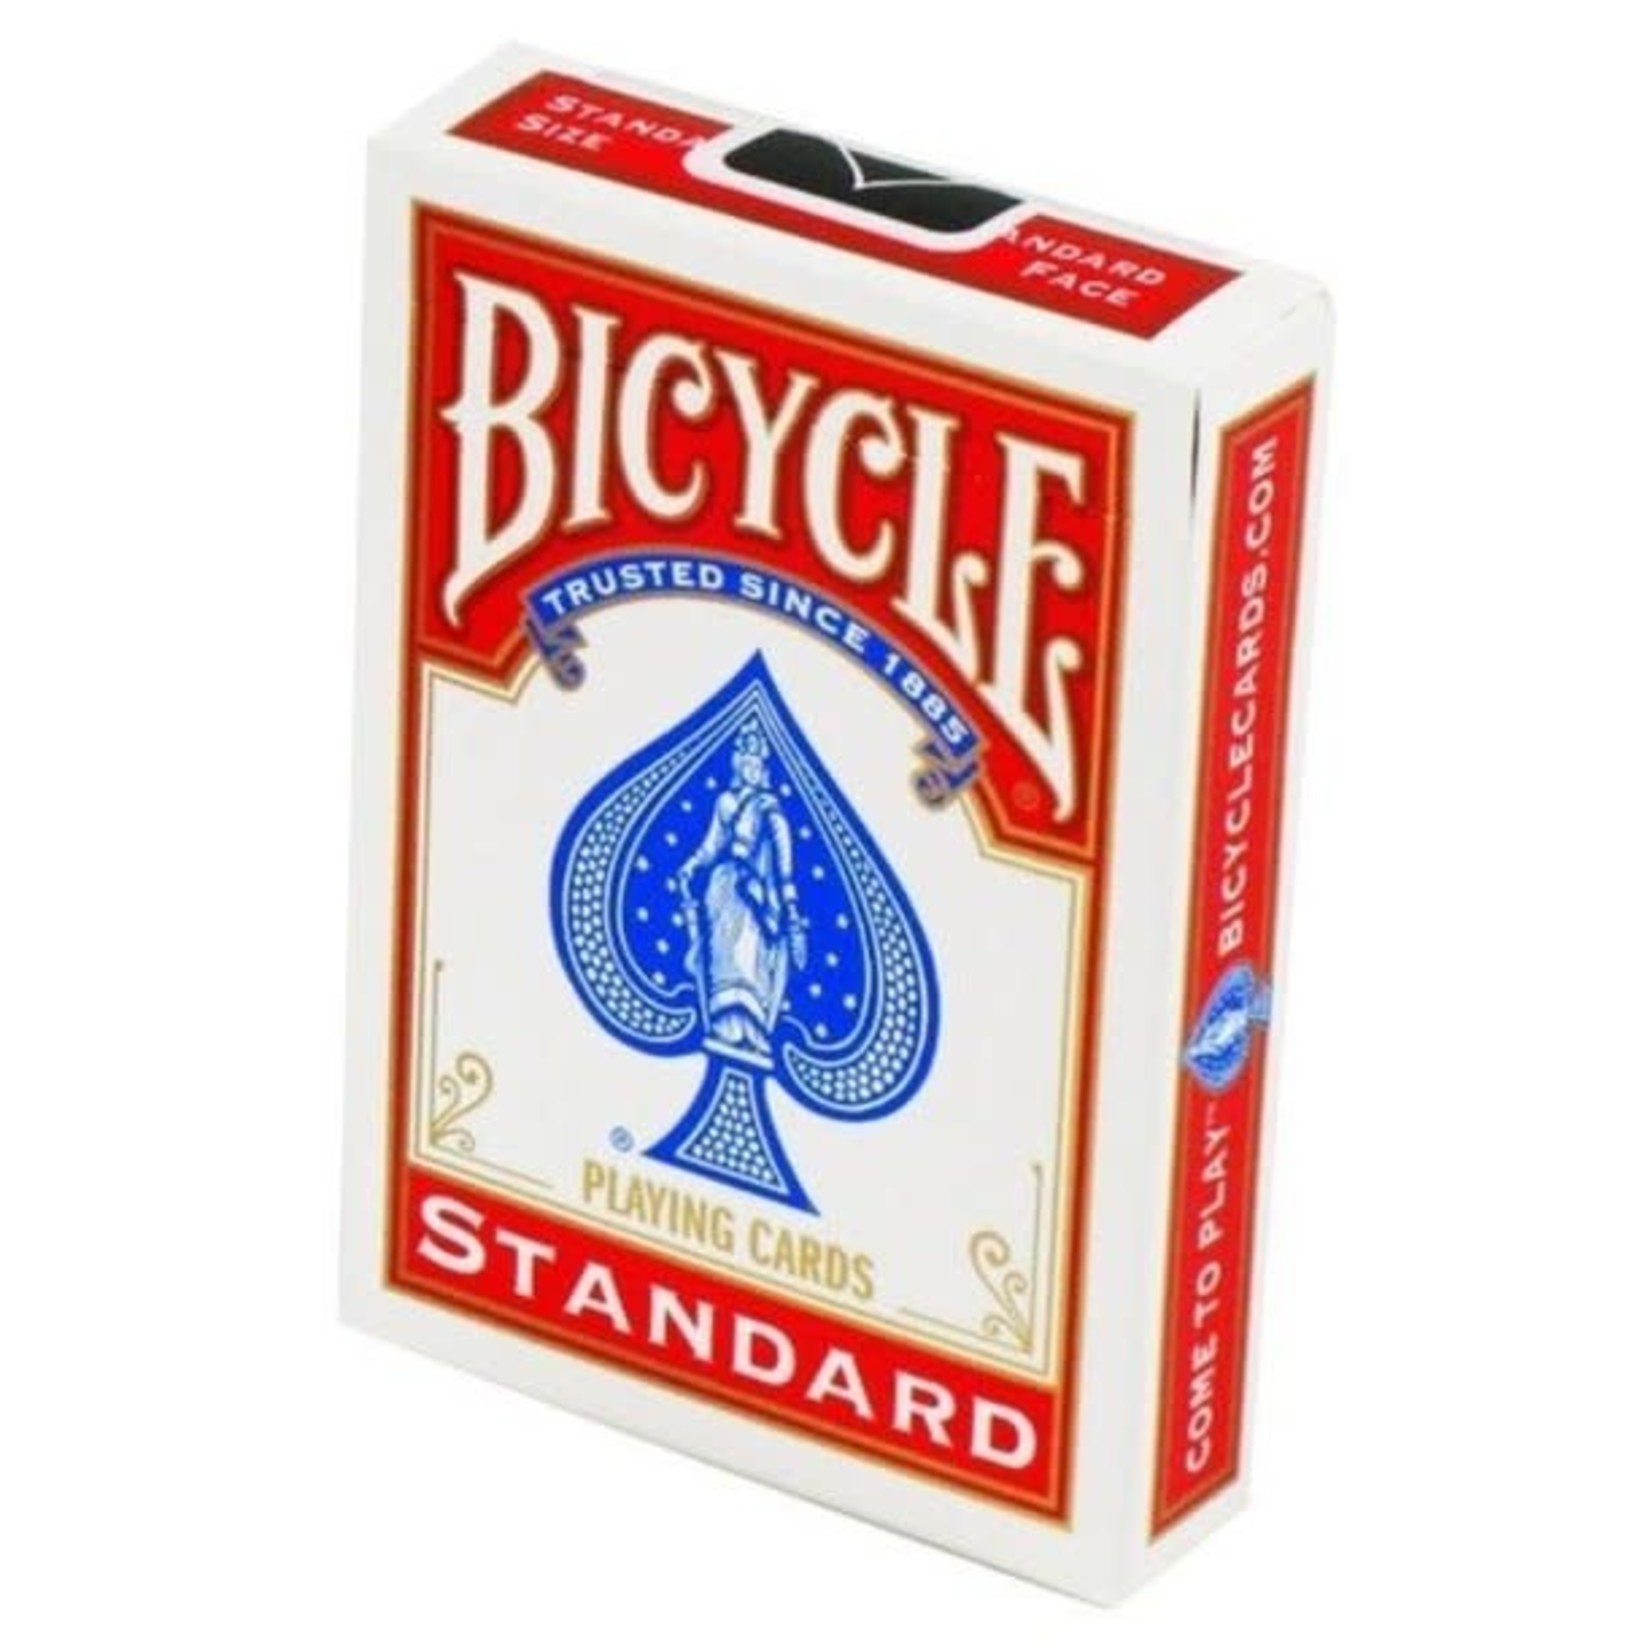 Bicycle BICYCLE STANDARD INDEX